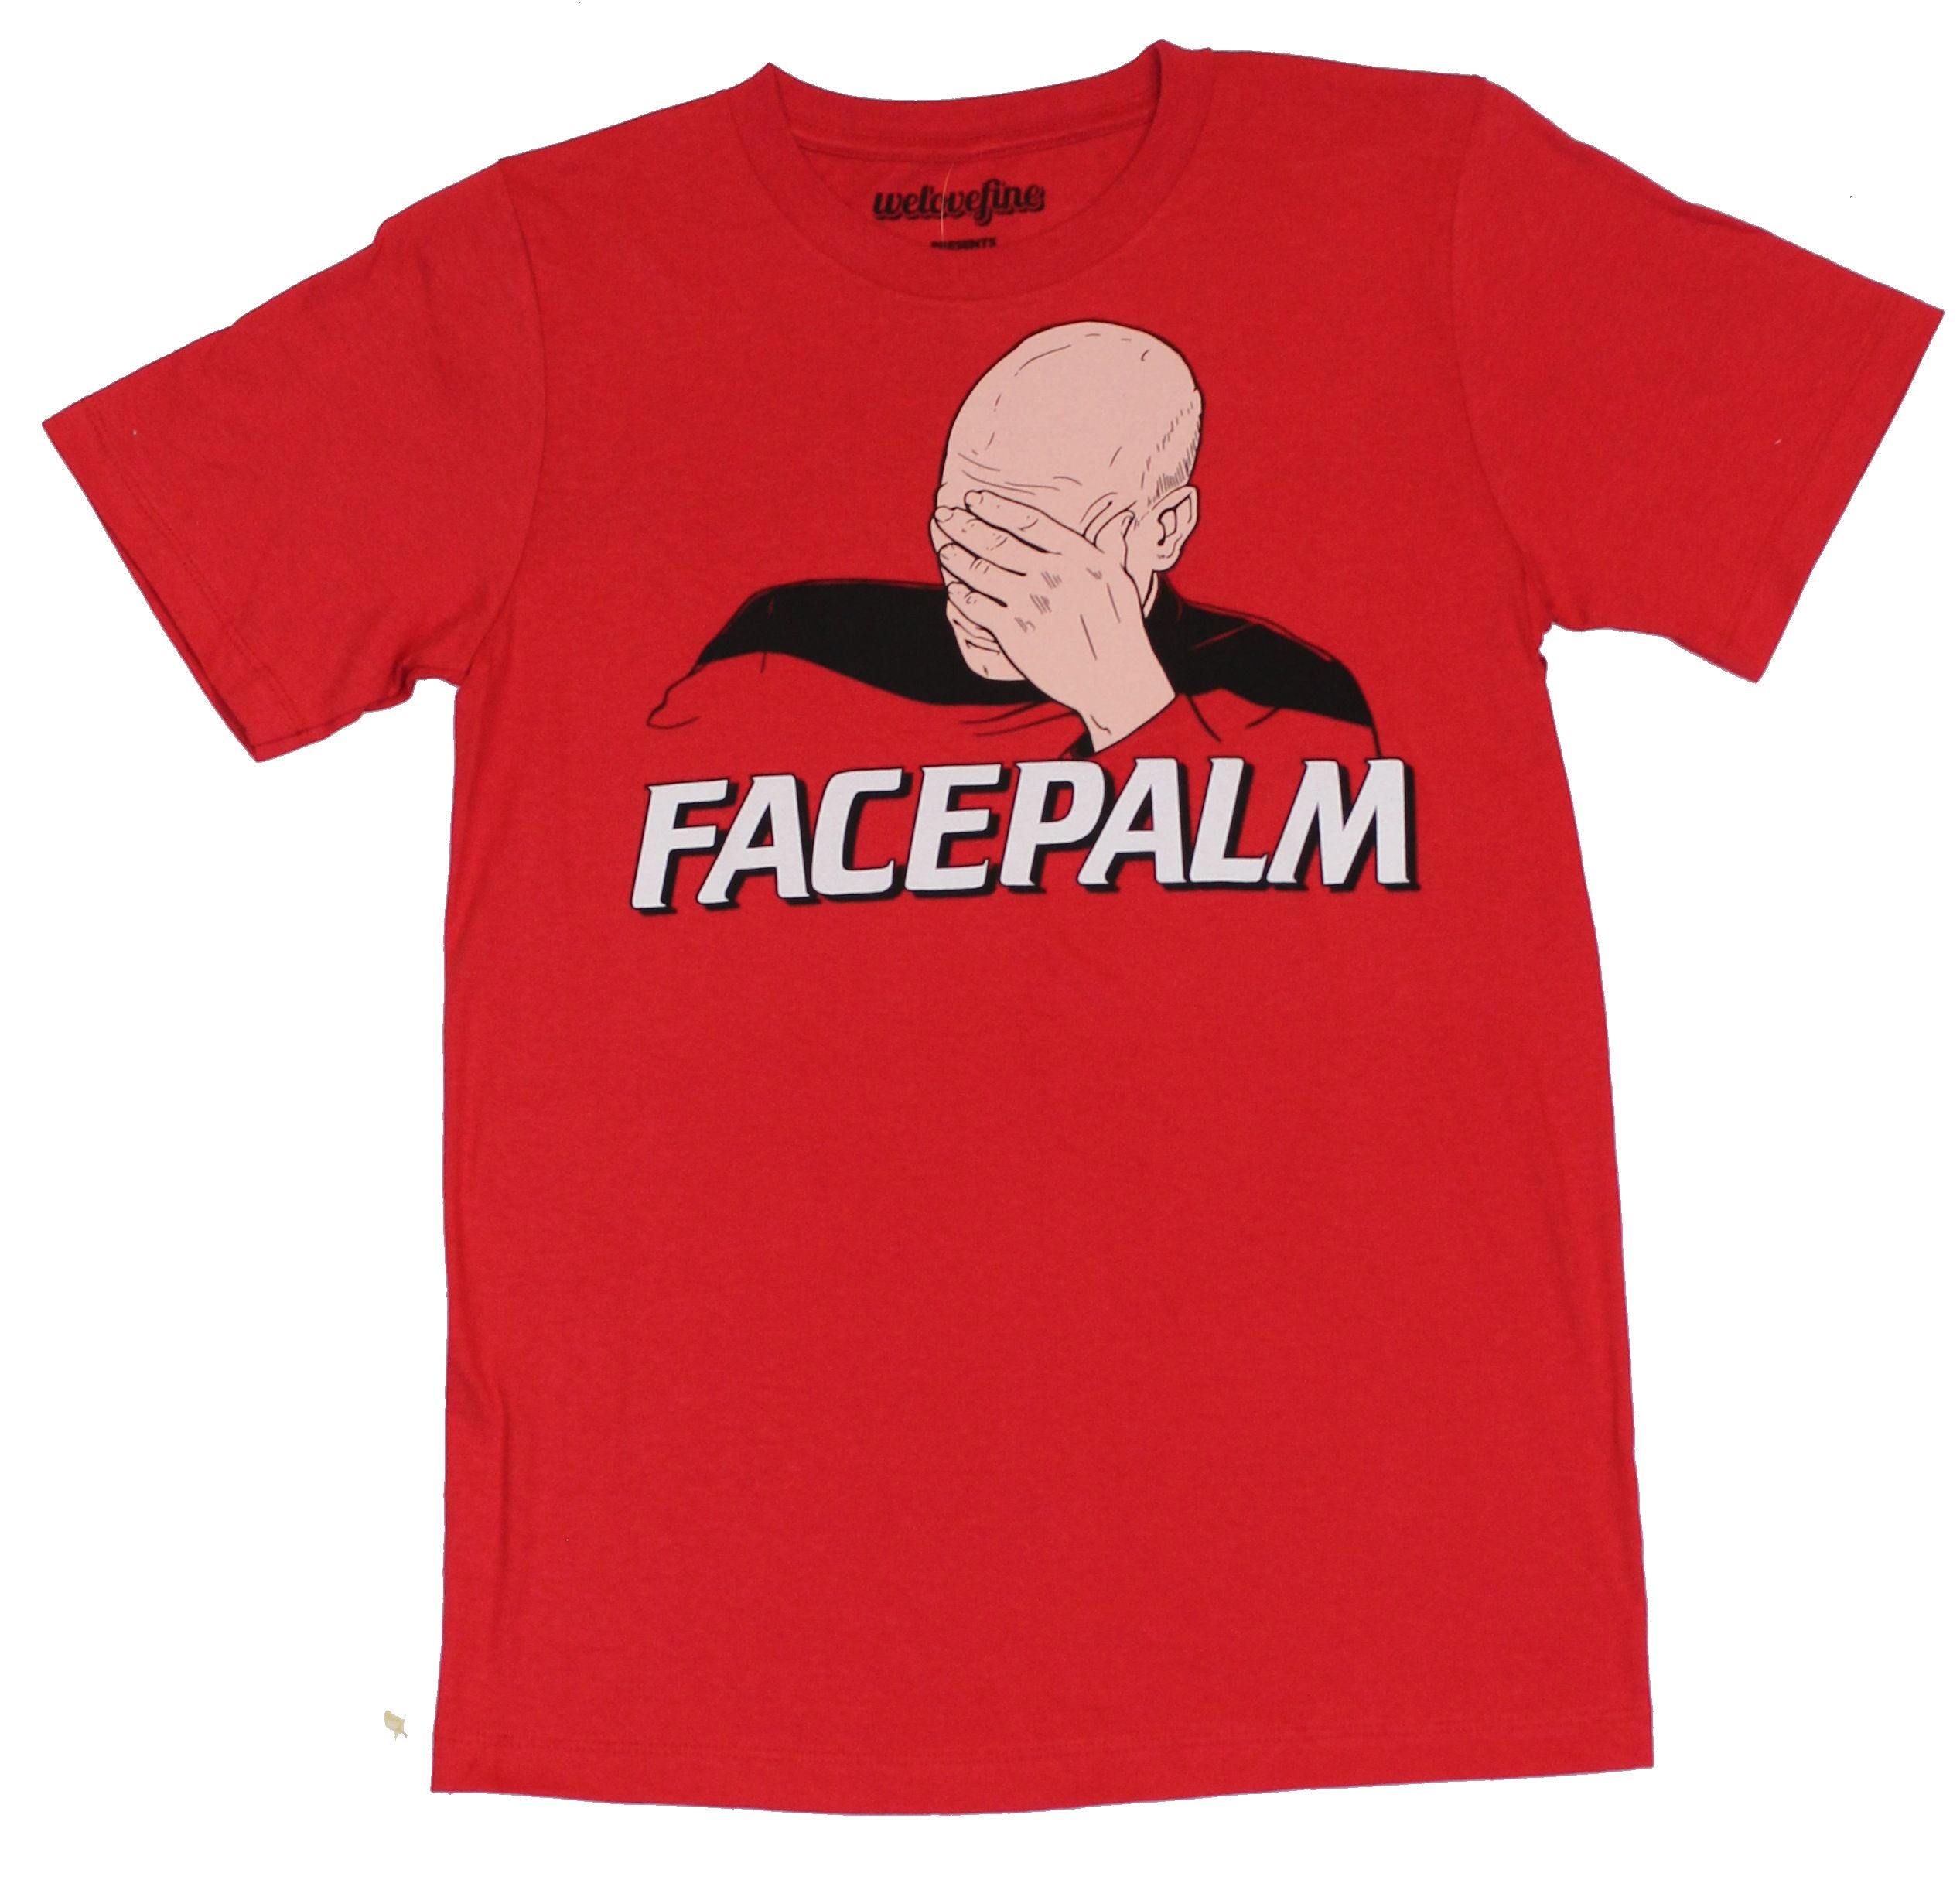 Star Trek The Next Generation Mens T-Shirt -  "Facepalm" Picard Image